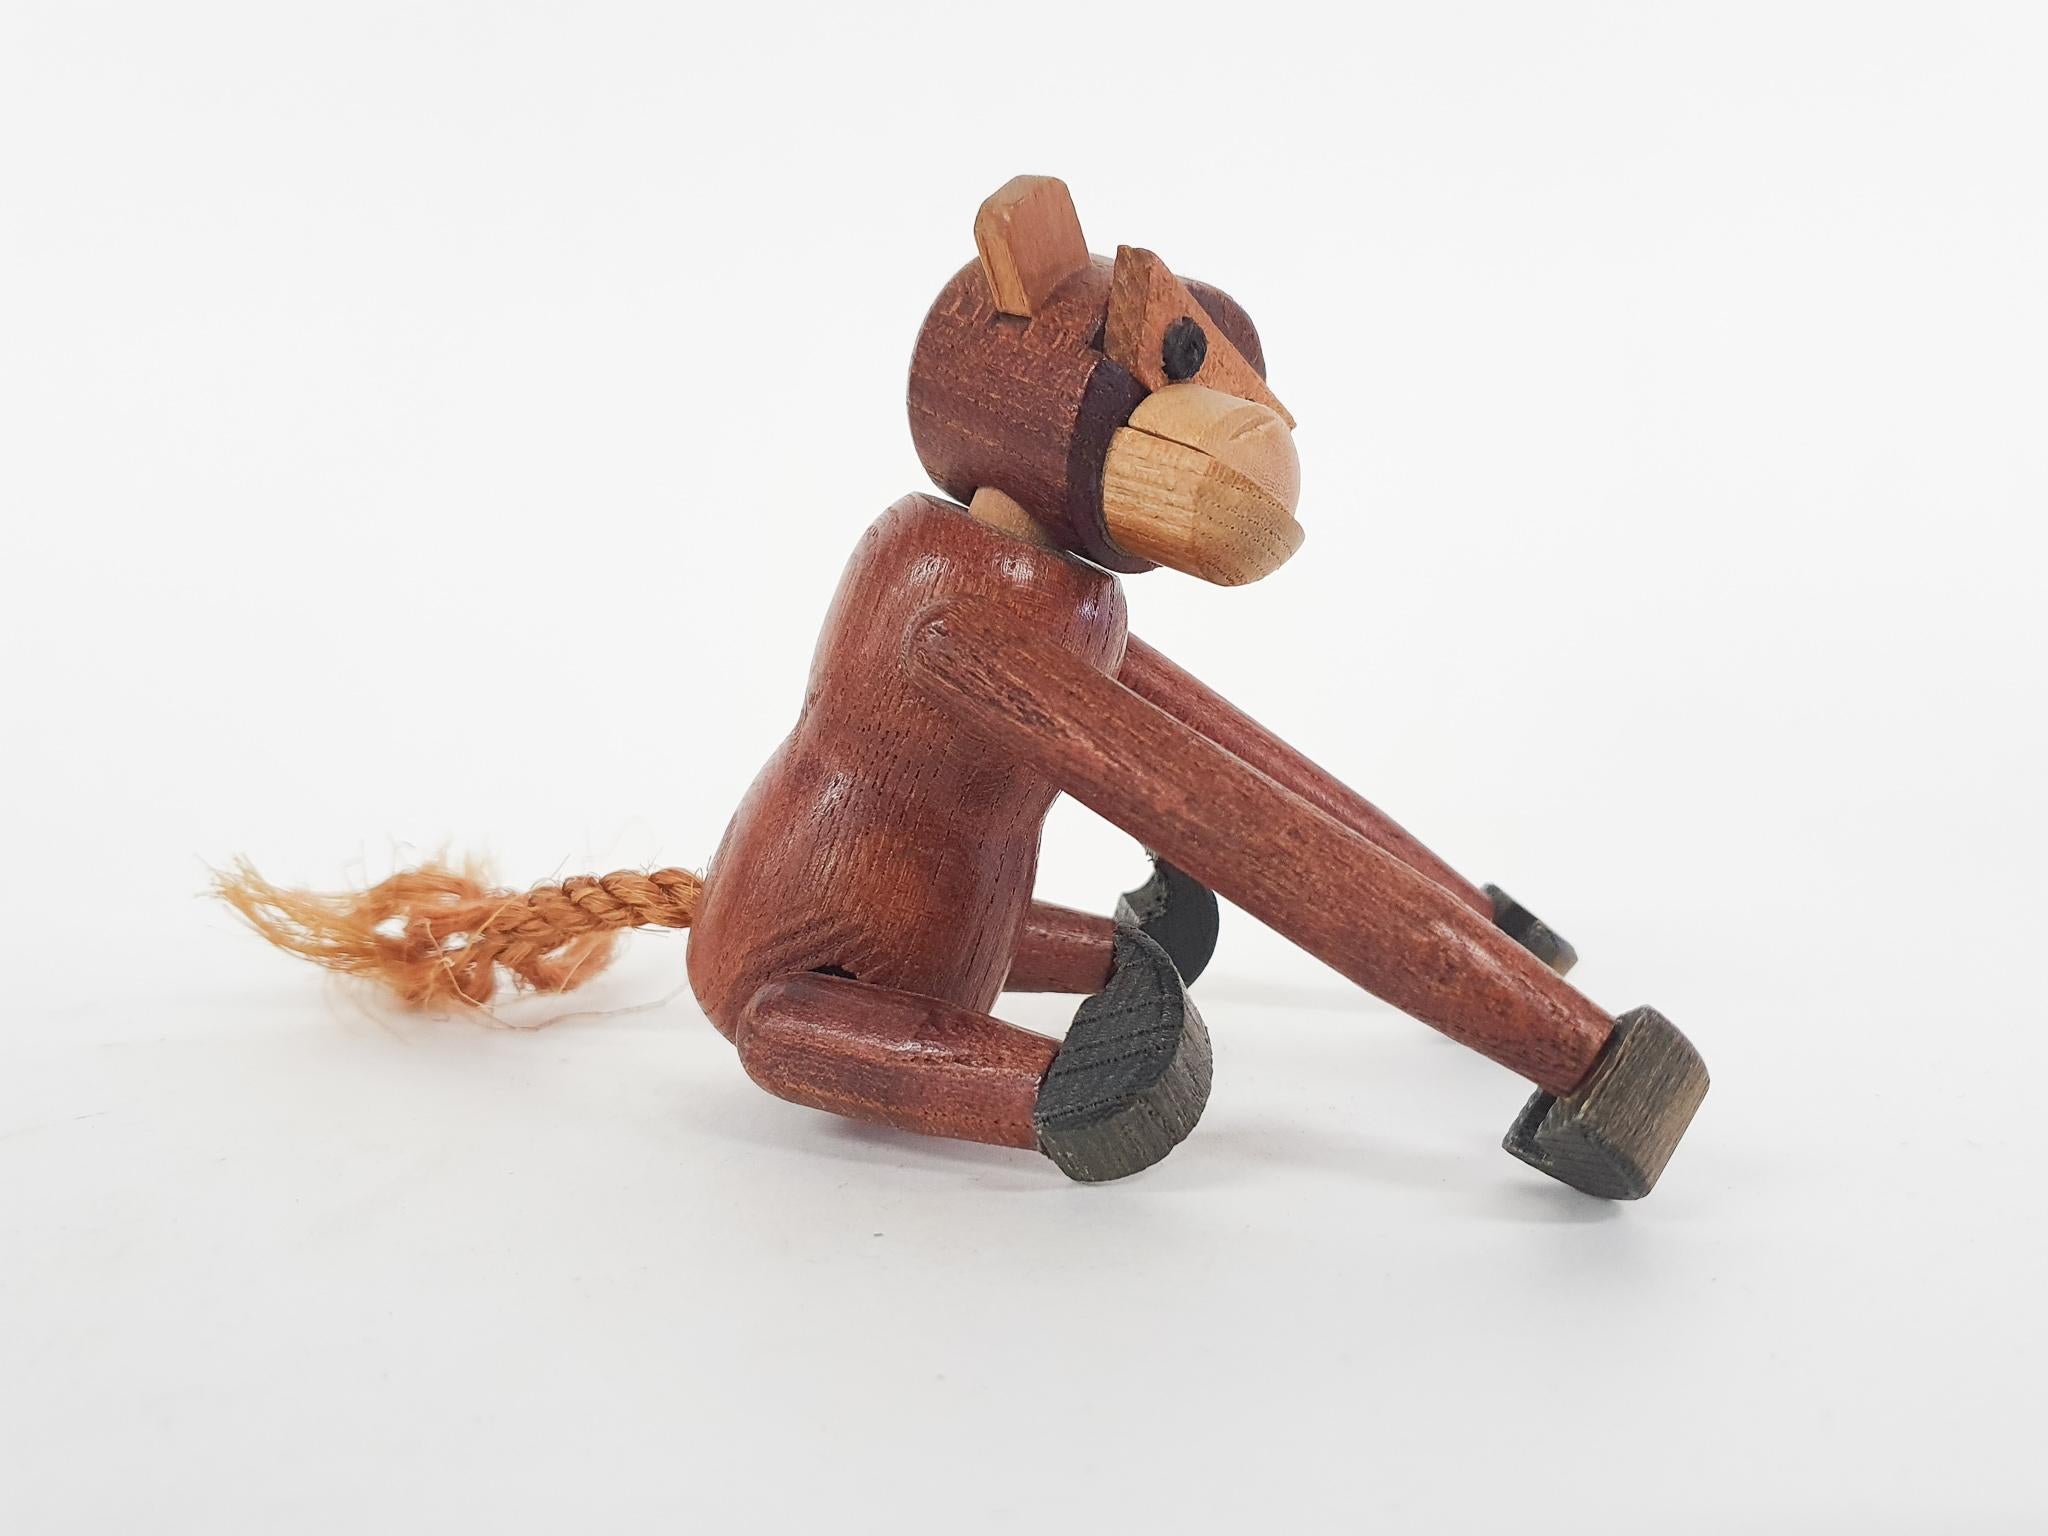 Mid-Century Modern Vintage Wooden Toy Monkey in the Style of Kay Bojesen, Denmark, 1960's